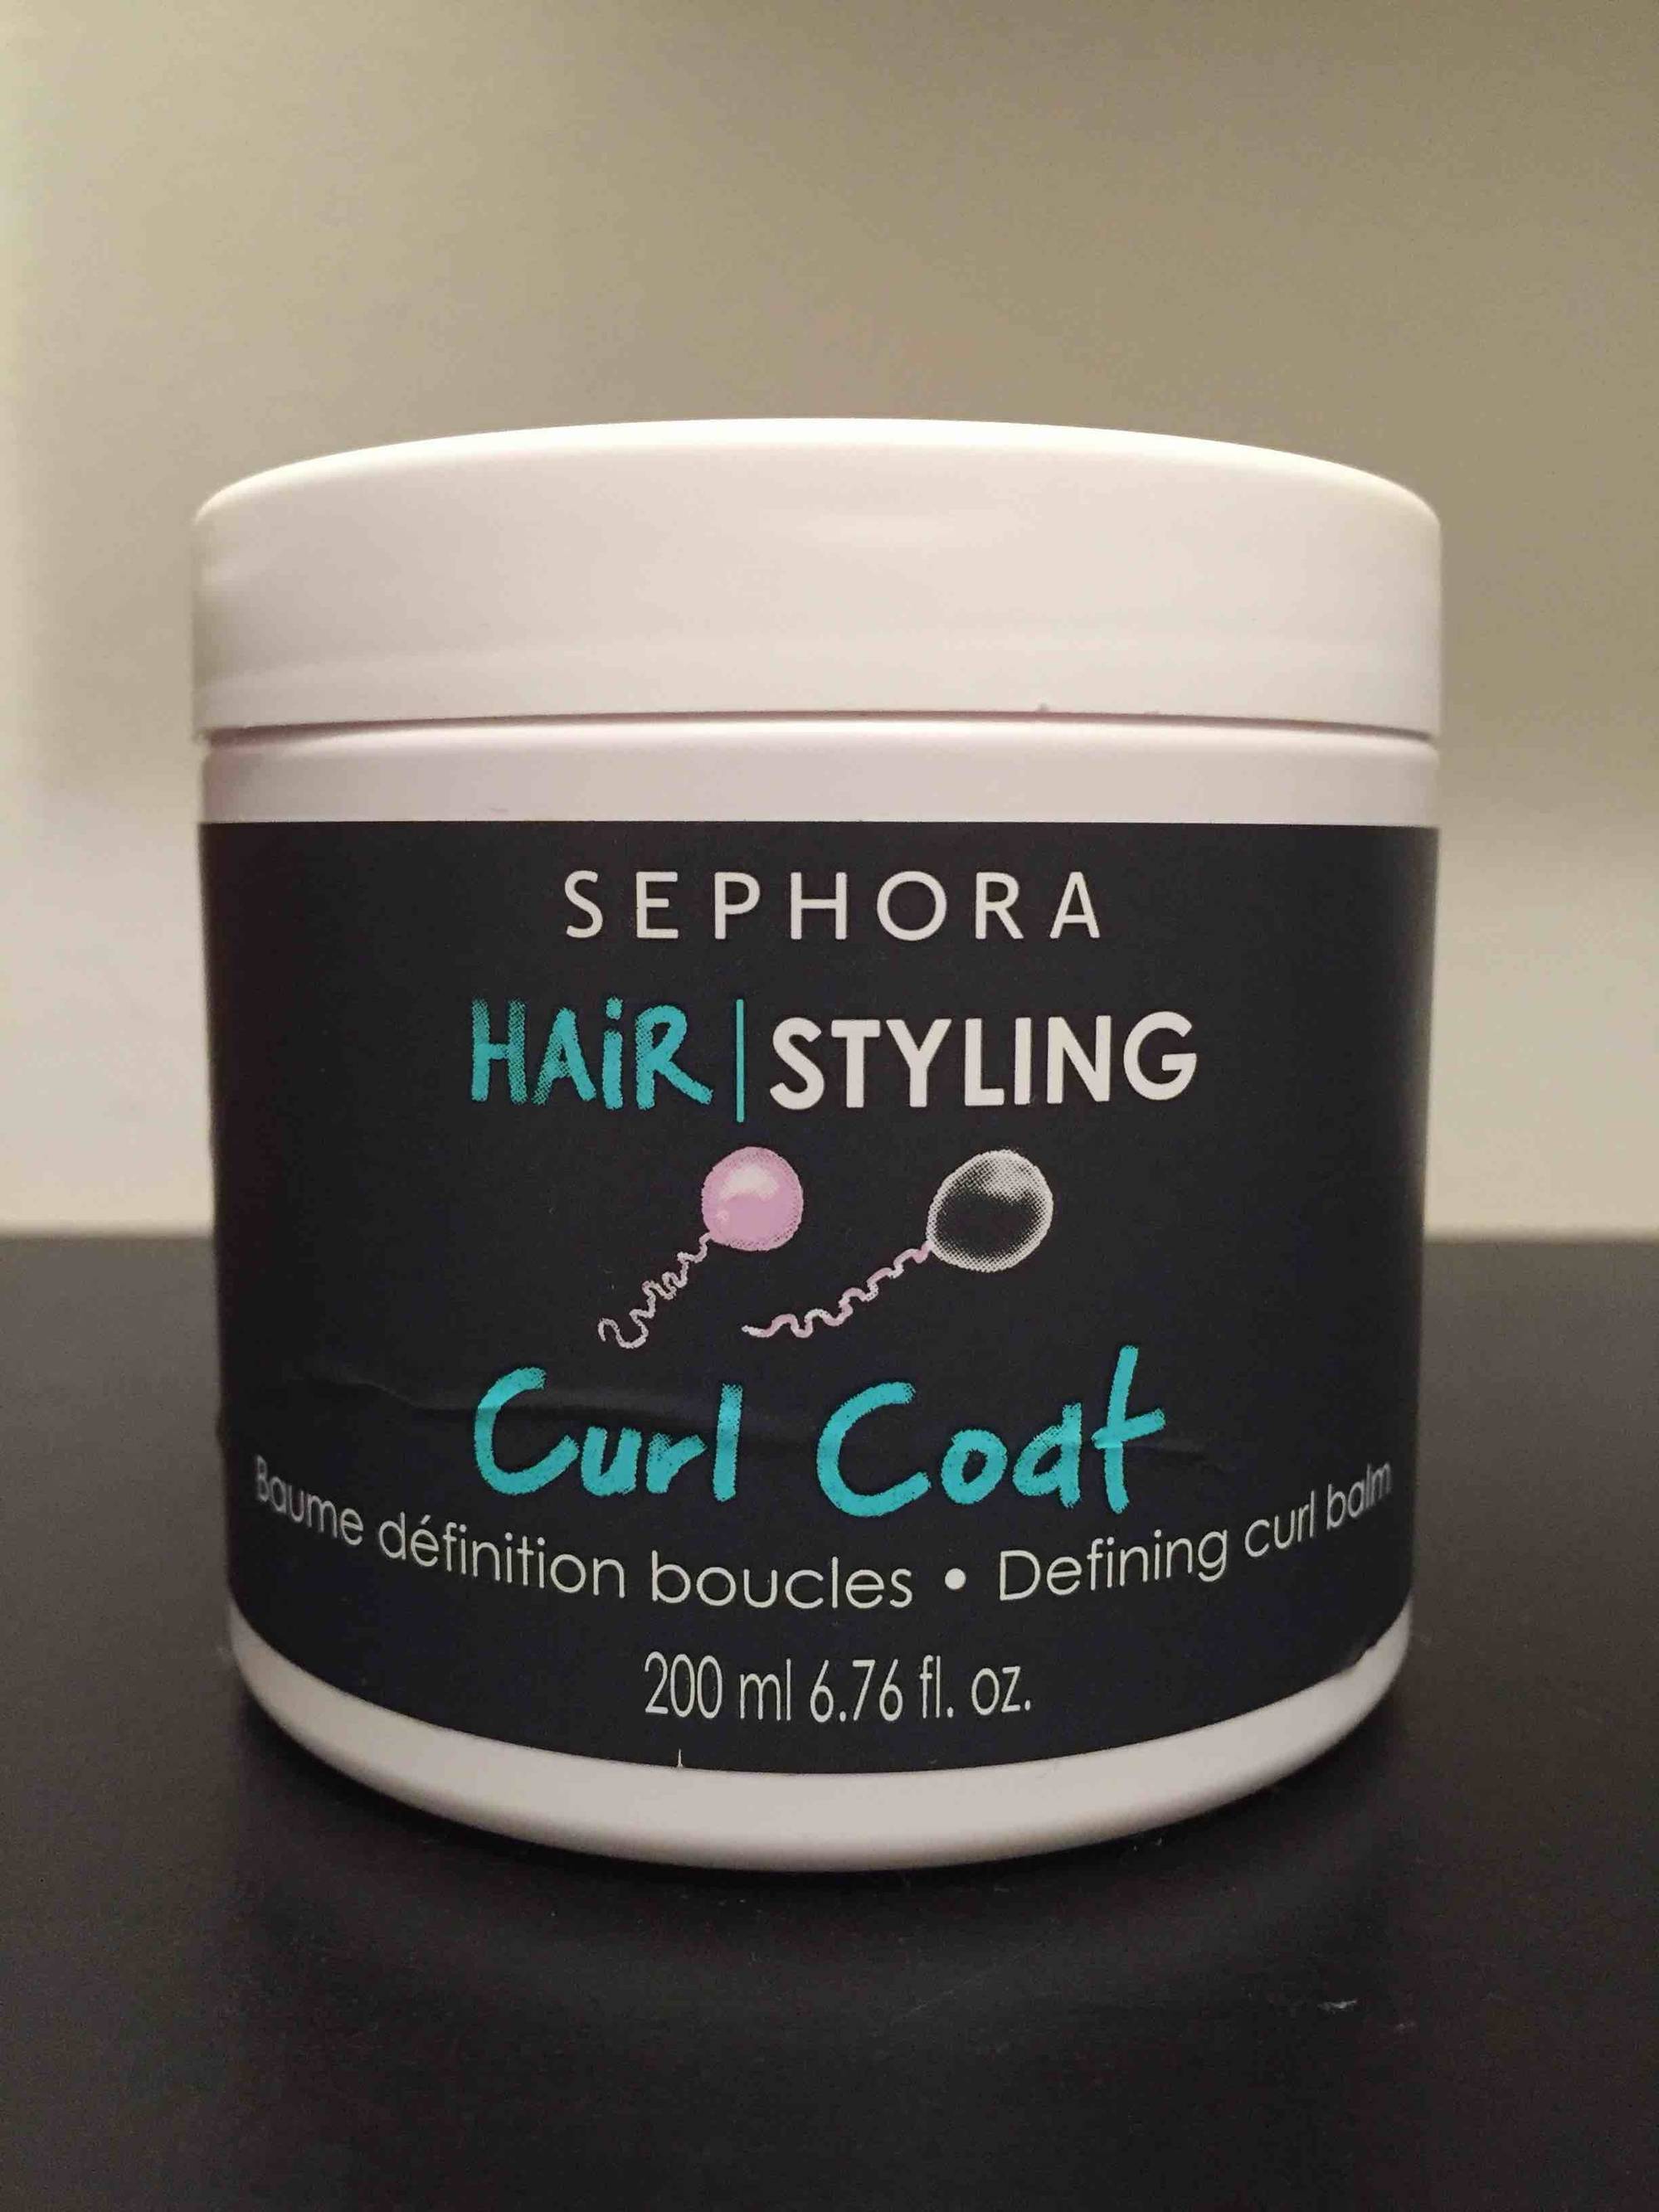 SEPHORA - Hair styling curl coat - Baume définition boucles